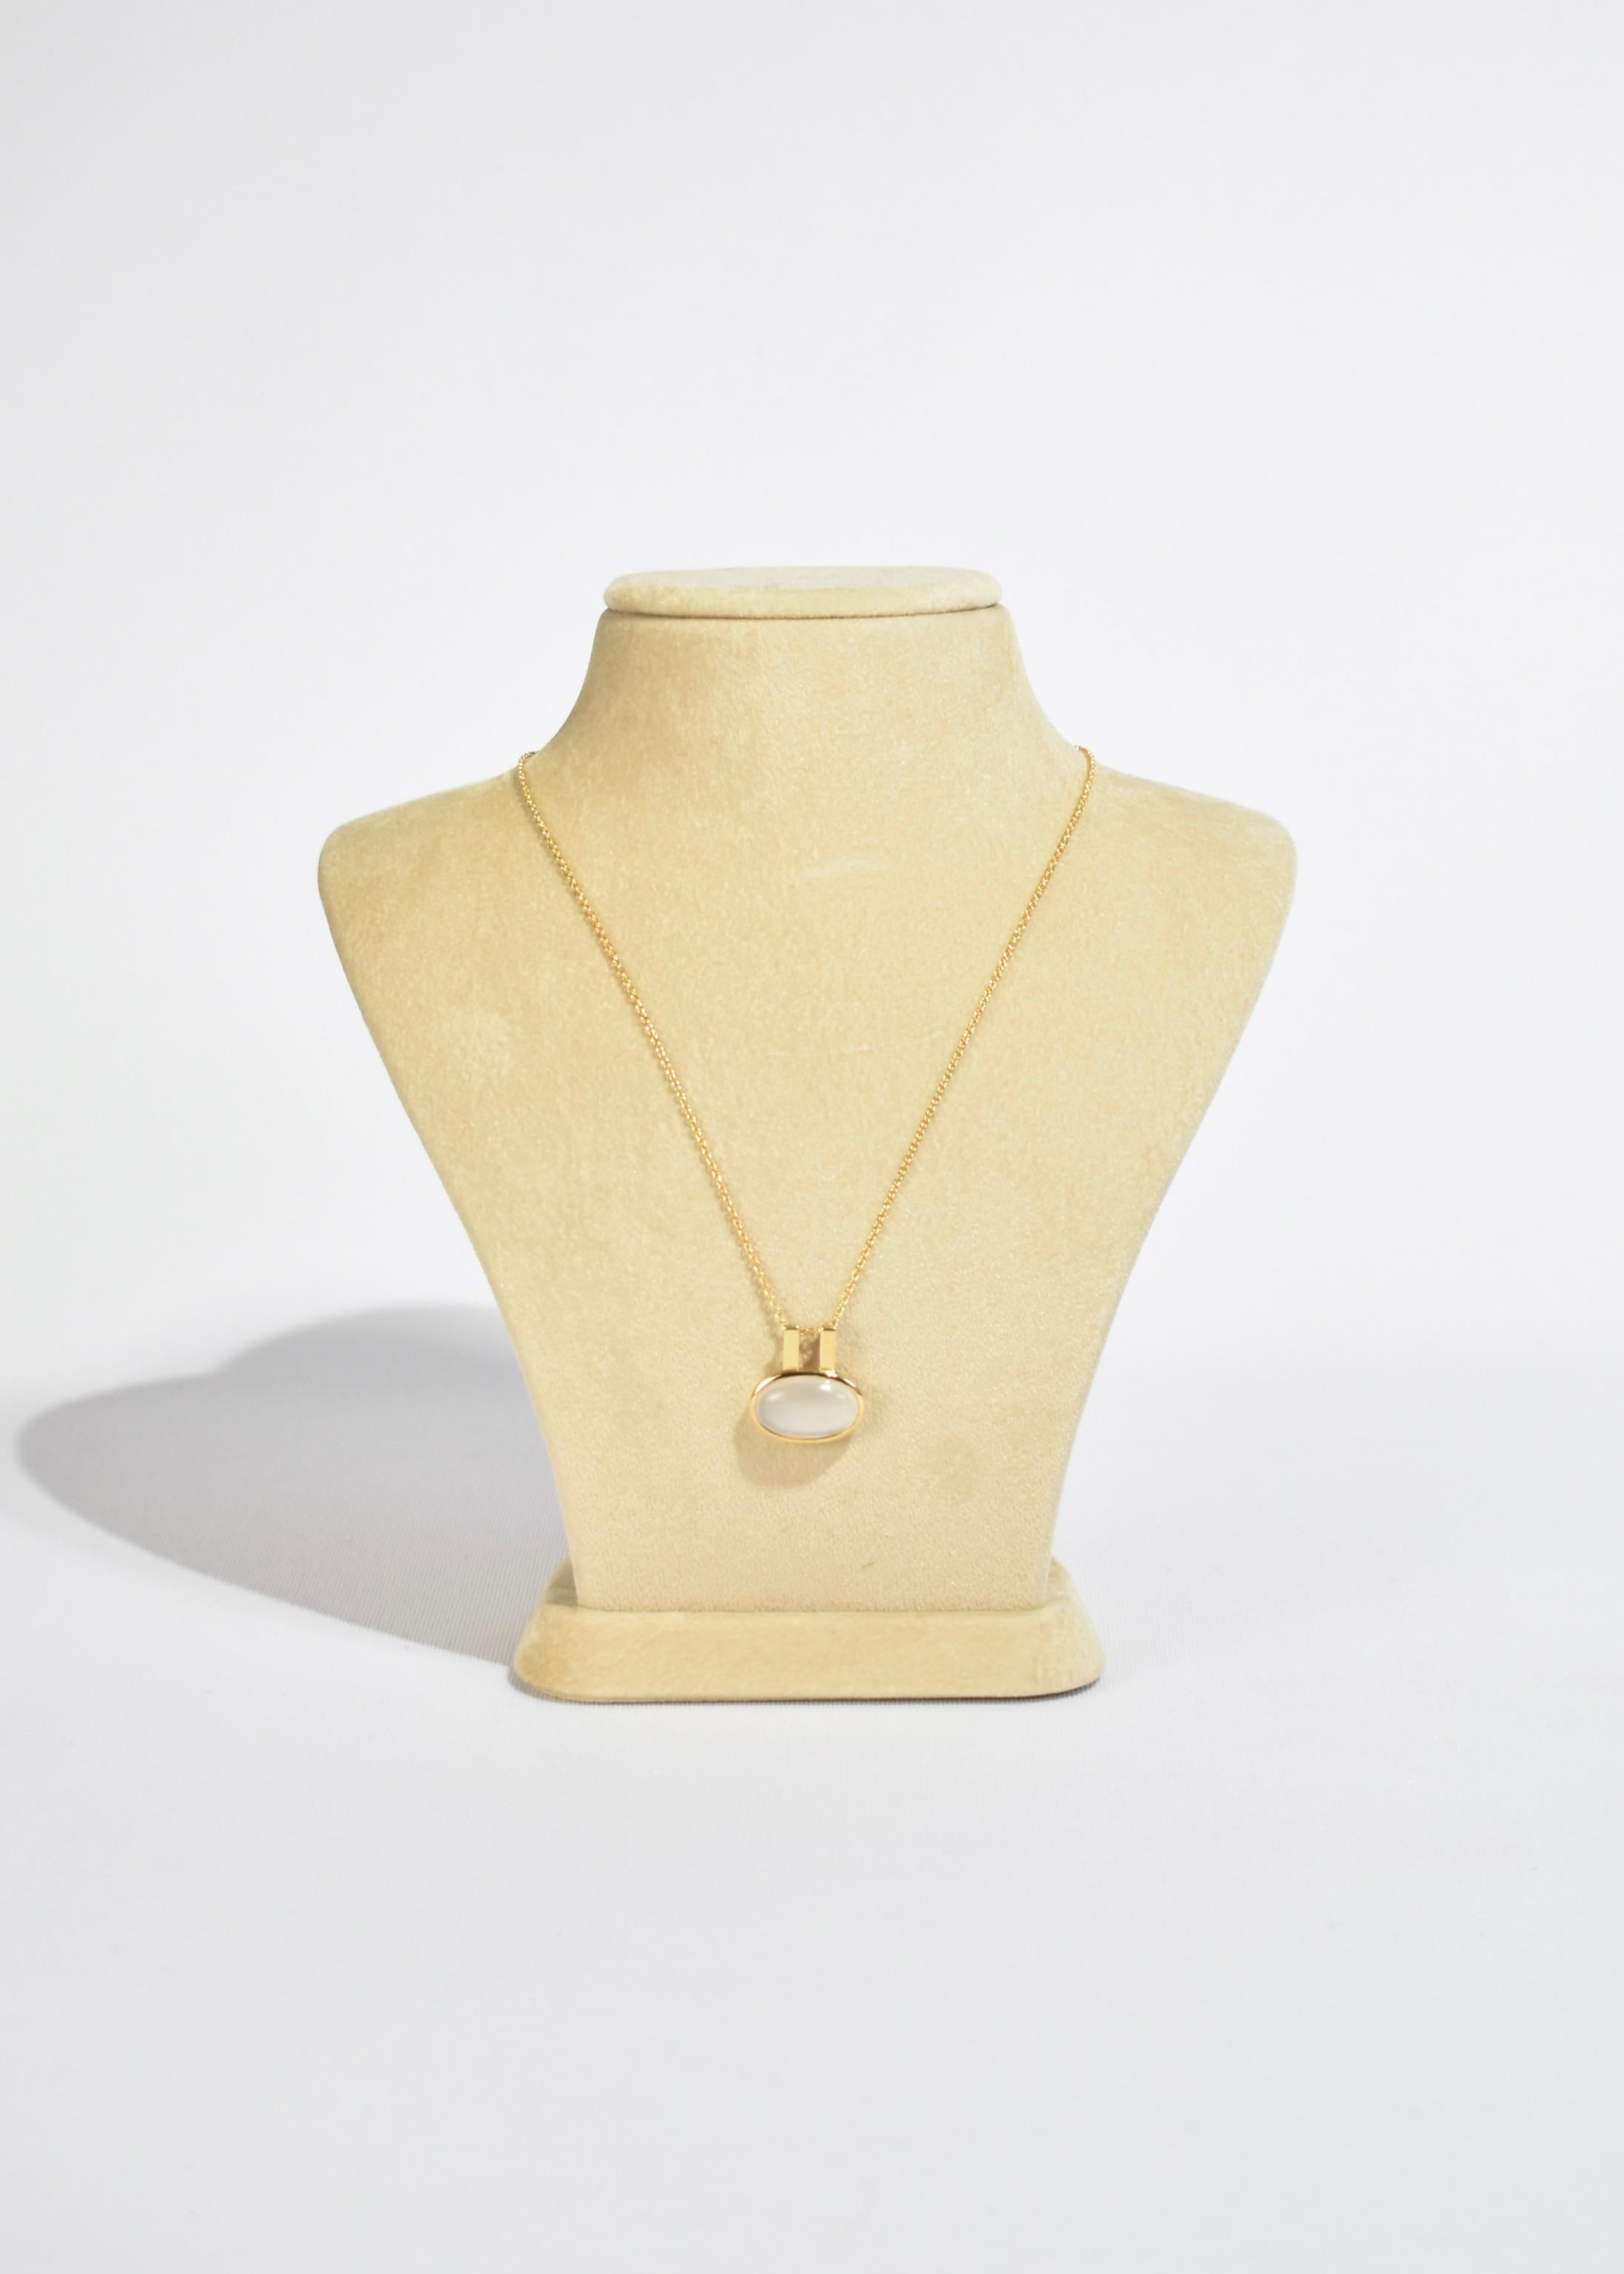 moonstone necklace vintage